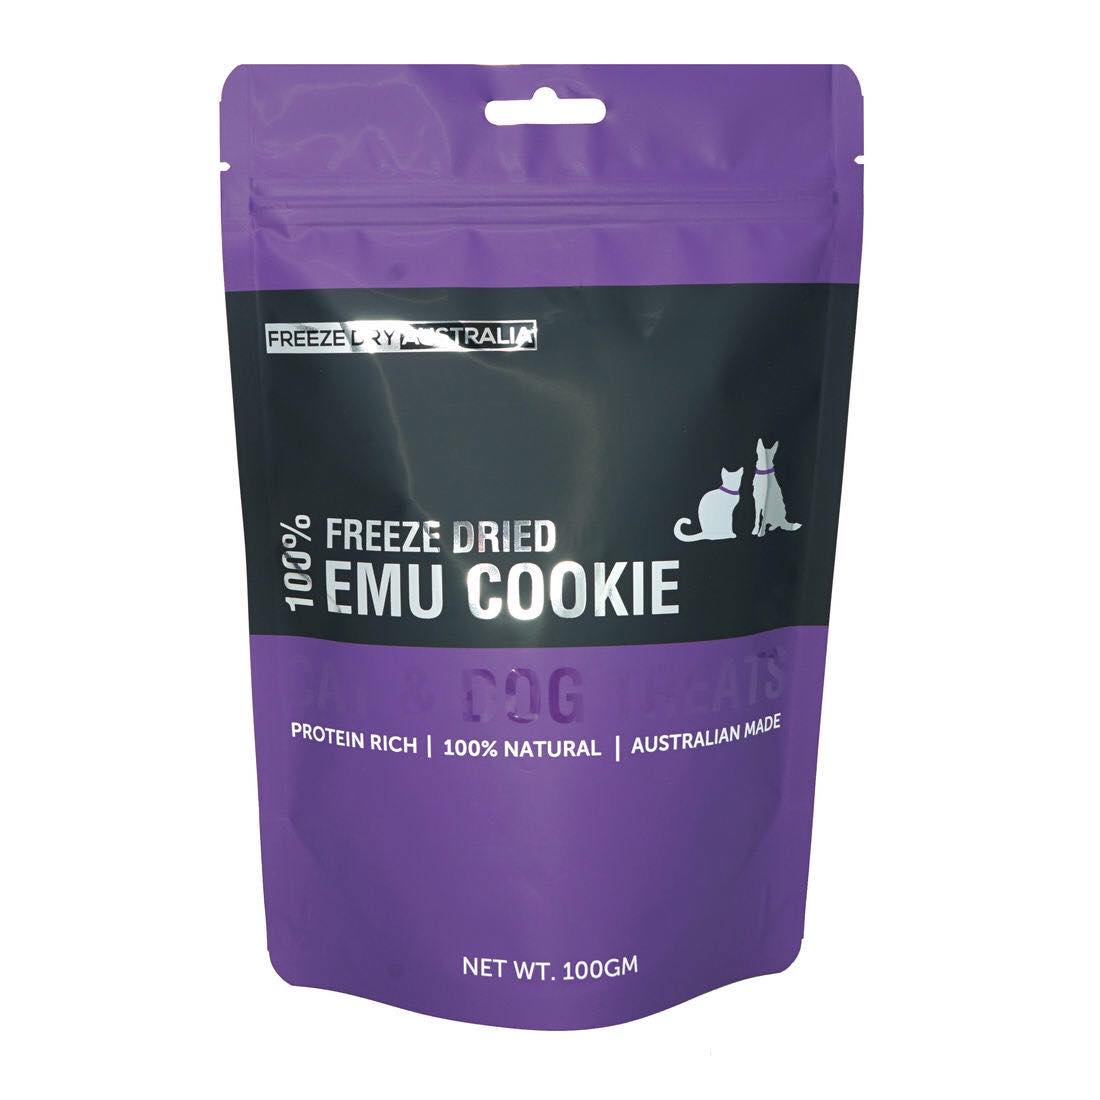 Freeze Dry Australia - Emu Cookies